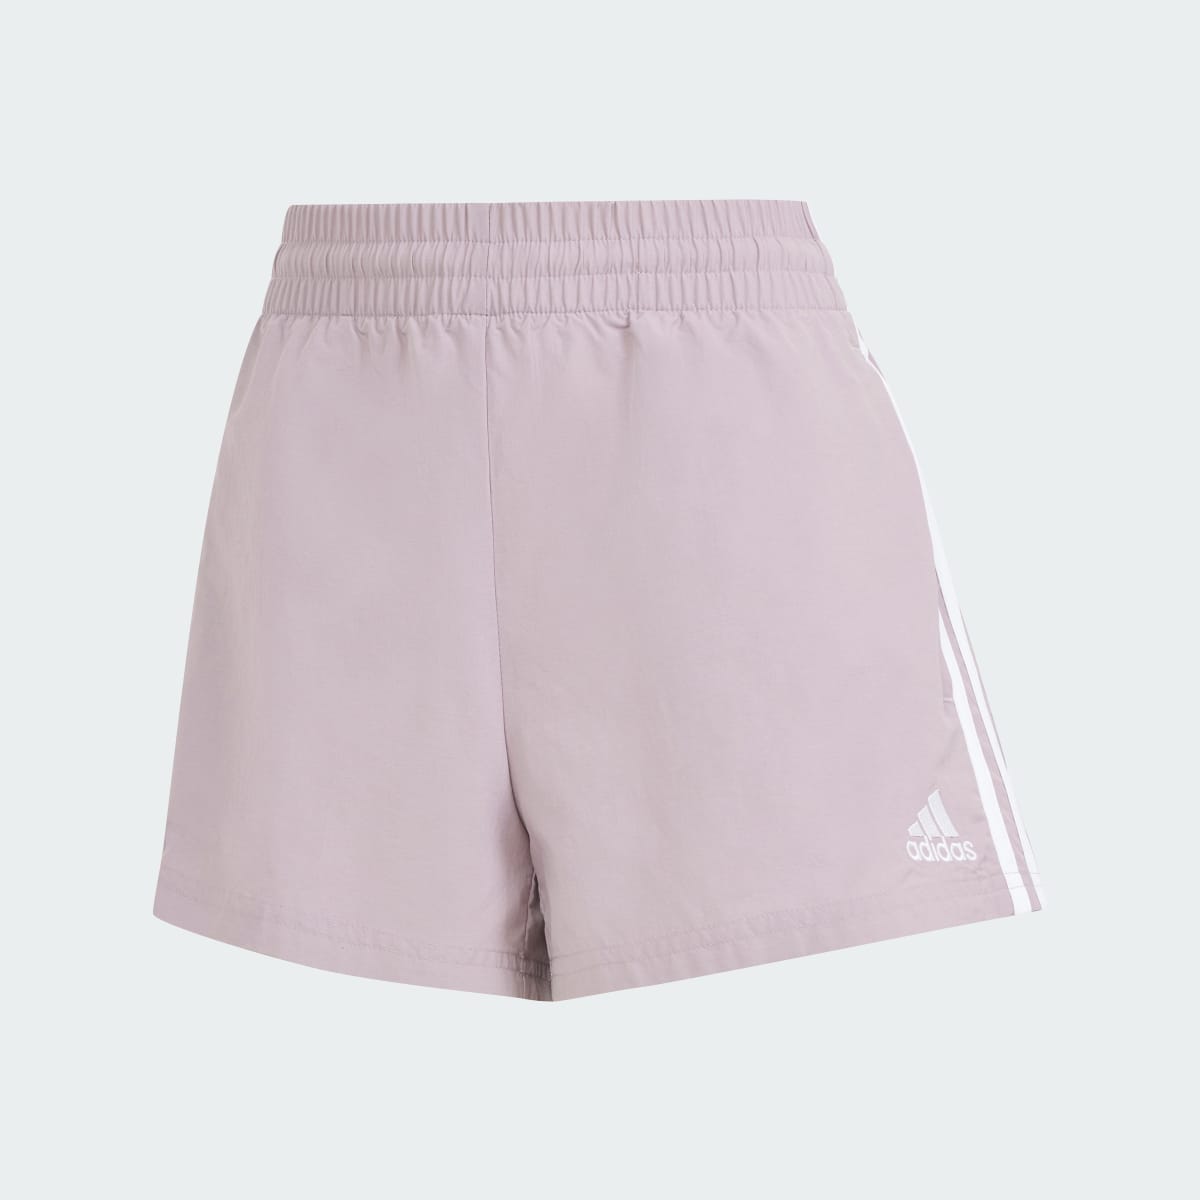 Adidas Essentials 3-Stripes Woven Shorts. 4